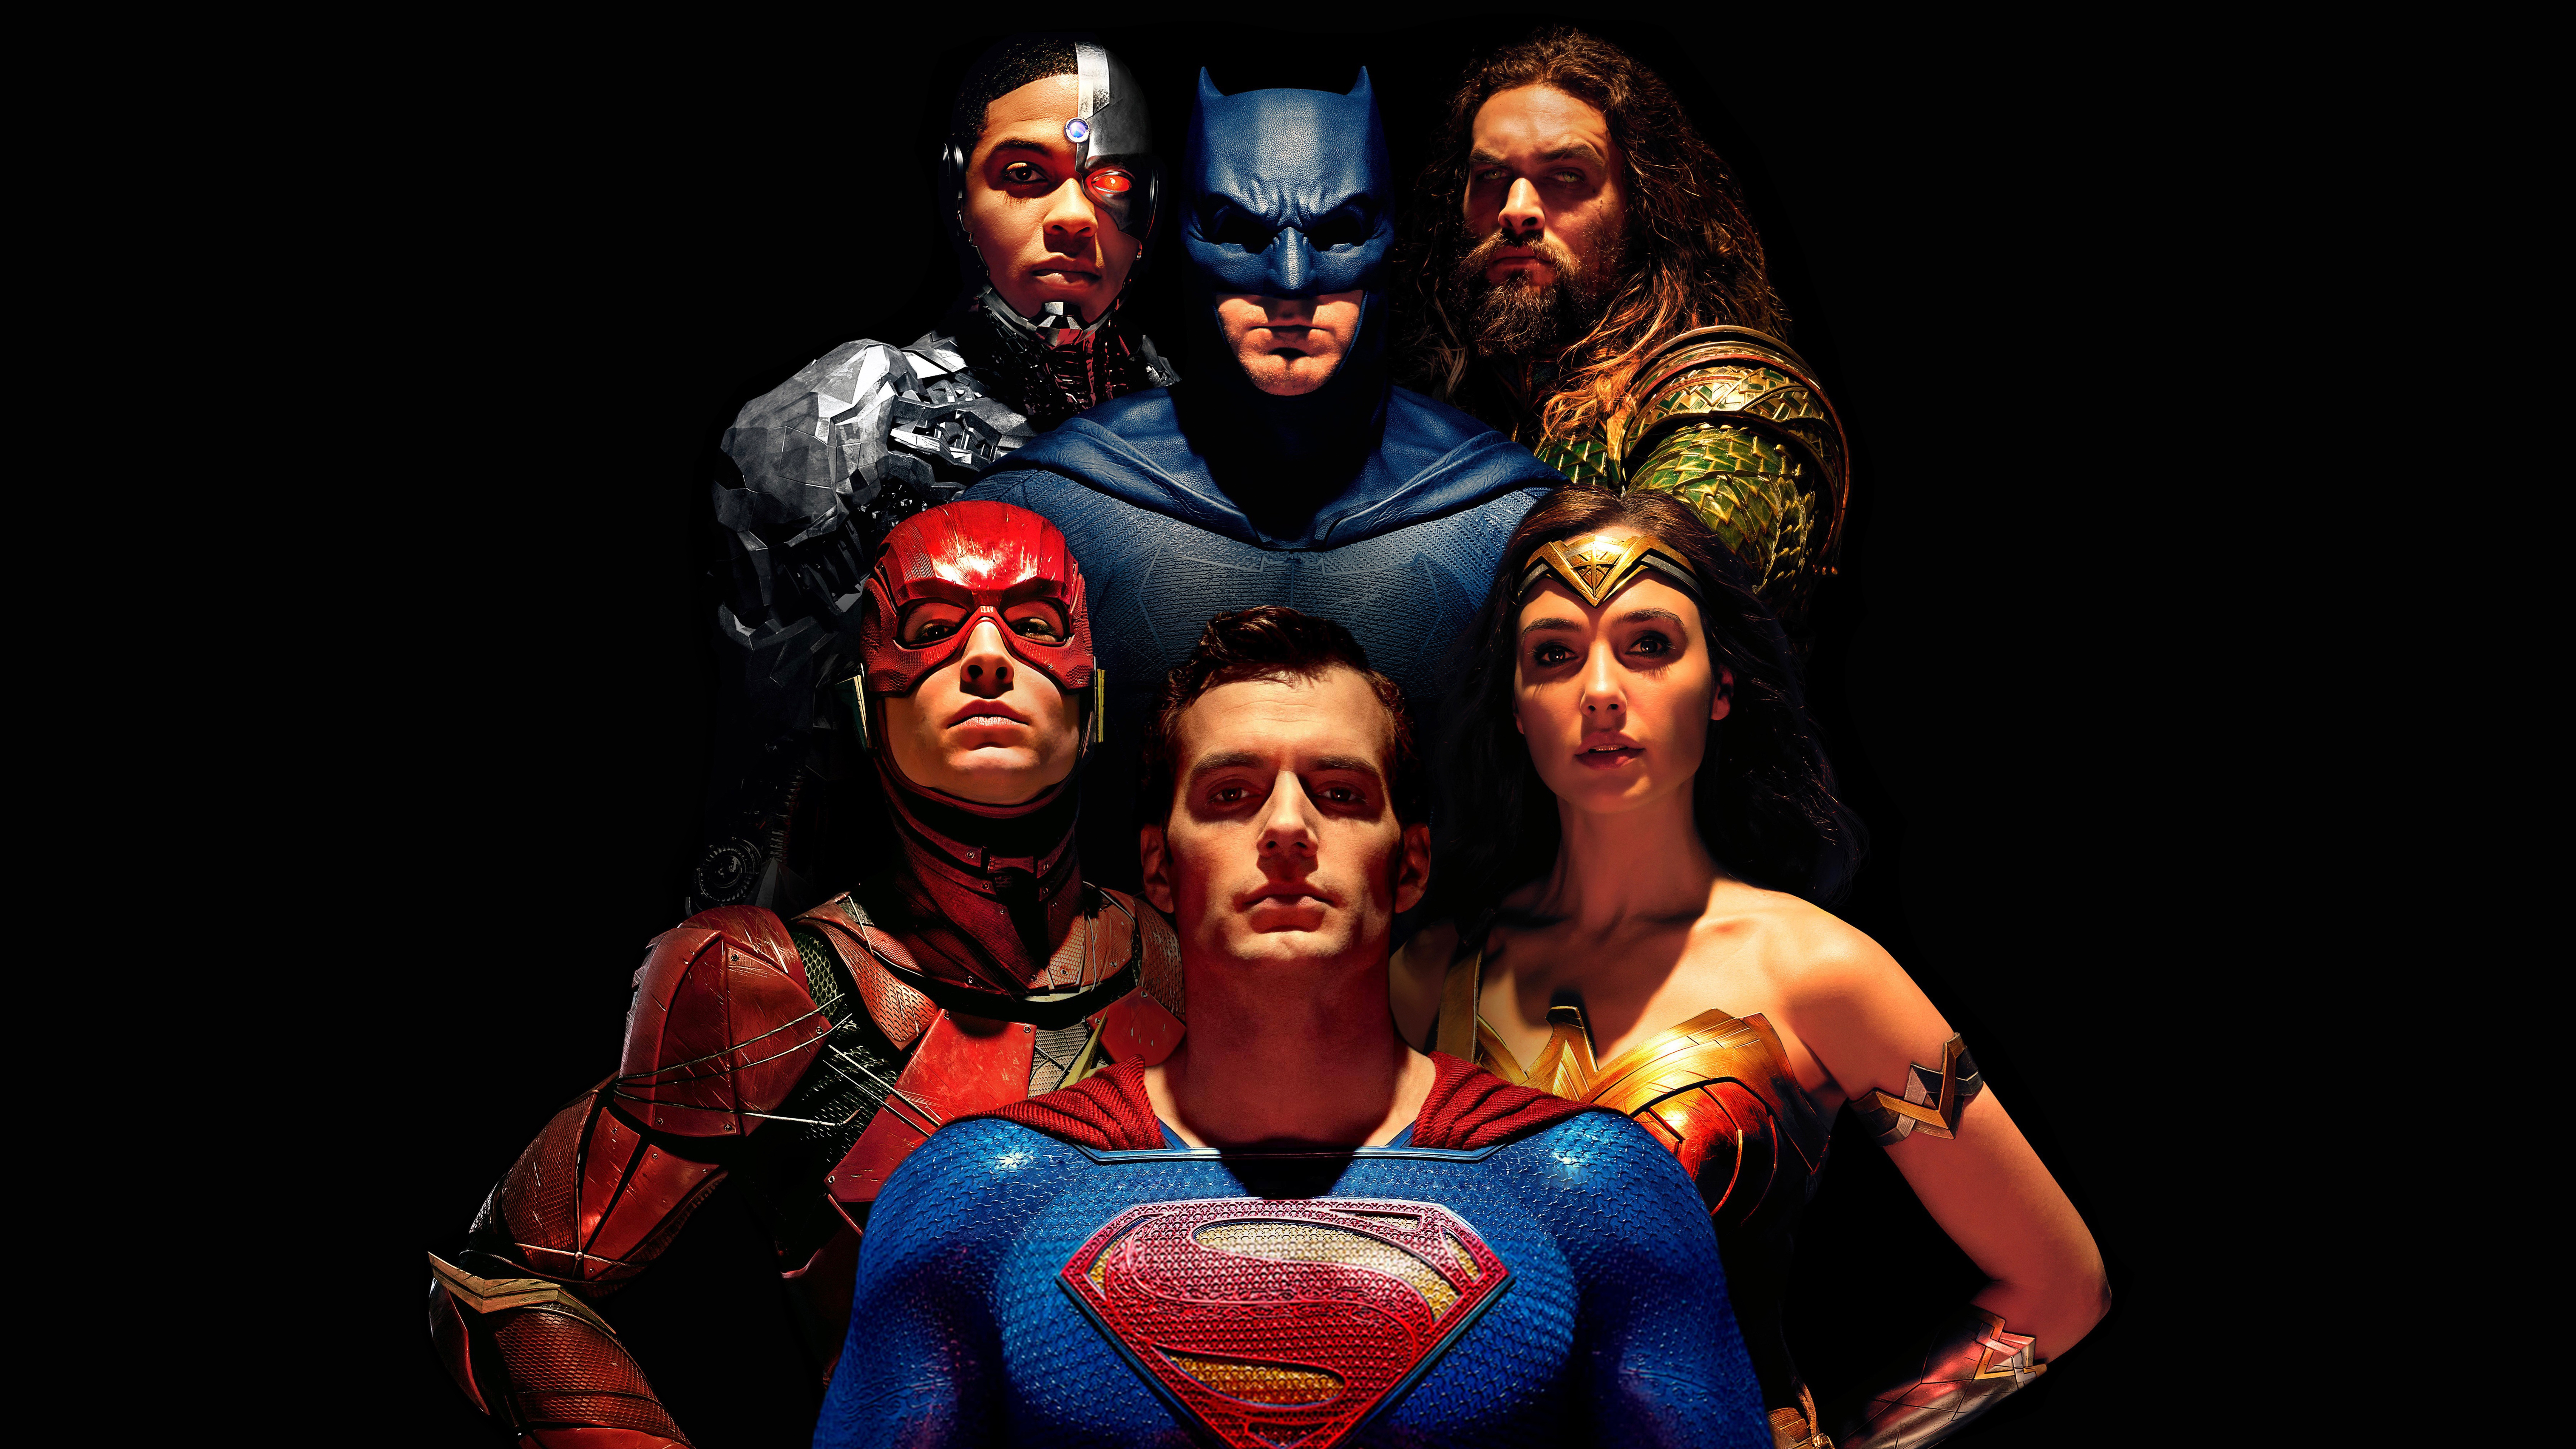 Descarga gratuita de fondo de pantalla para móvil de Superhombre, Destello, Películas, Dc Comics, Hombre Murciélago, Aquamán, La Mujer Maravilla, Cyborg (Dc Cómics), La Liga De La Justicia.